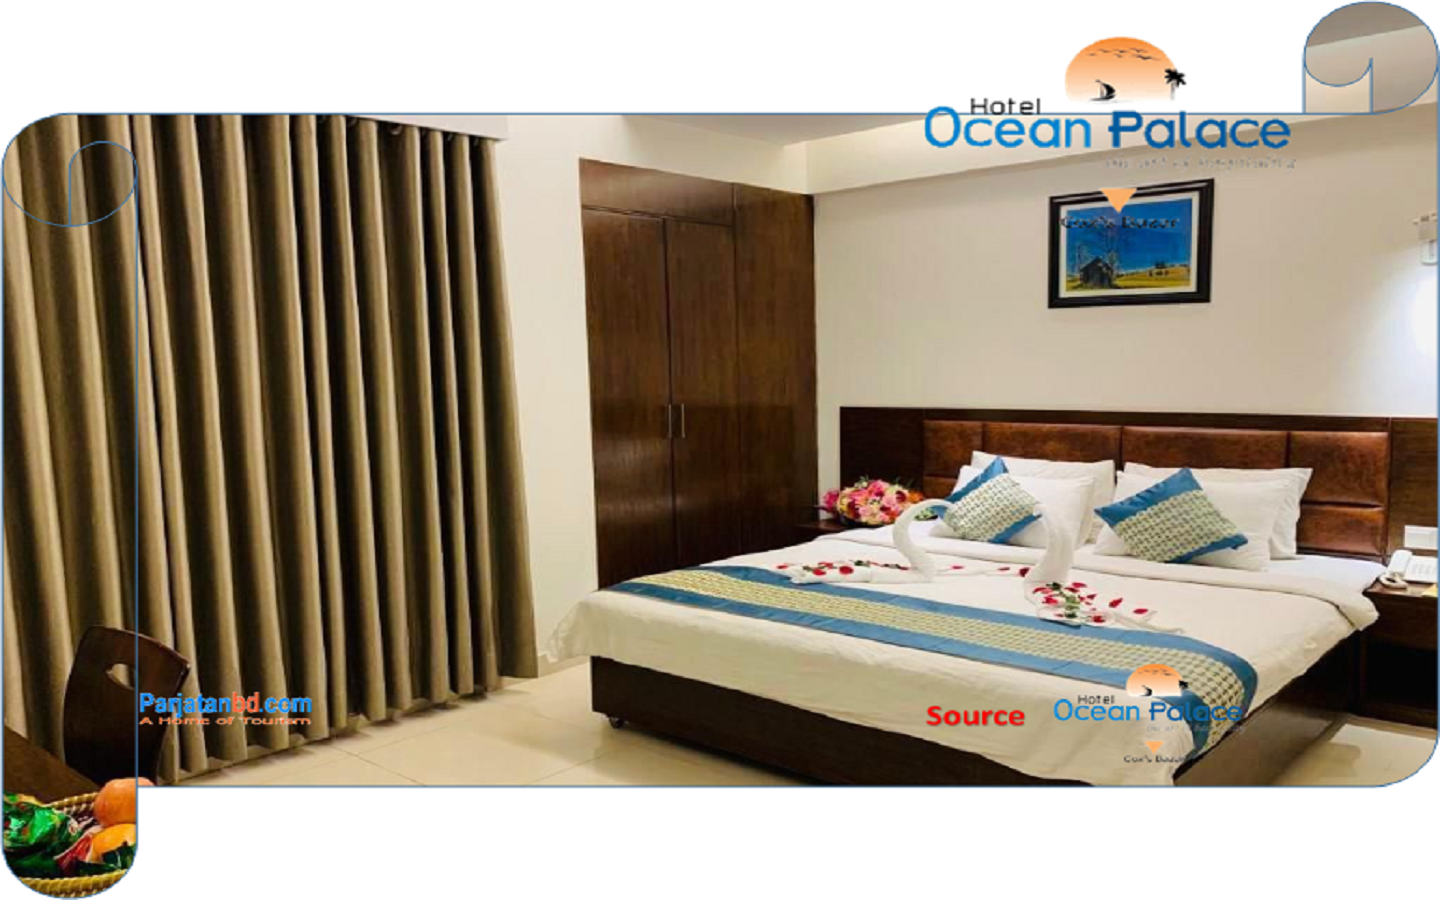 Ocean Palace Hotel, Coxs Bazar Picture-2